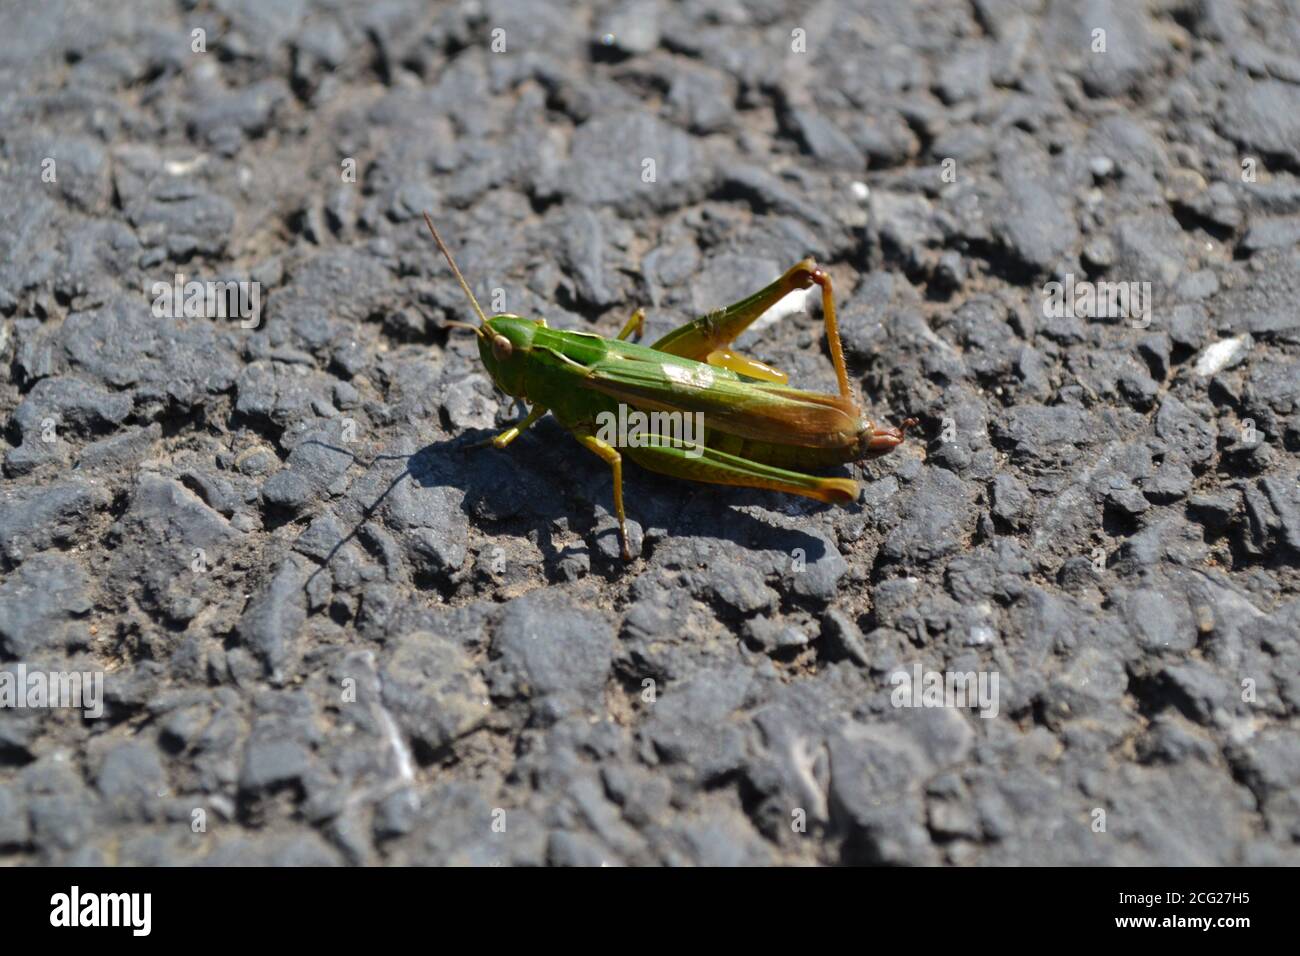 Green Grasshopper pausing on tarmac between leaps. Stock Photo